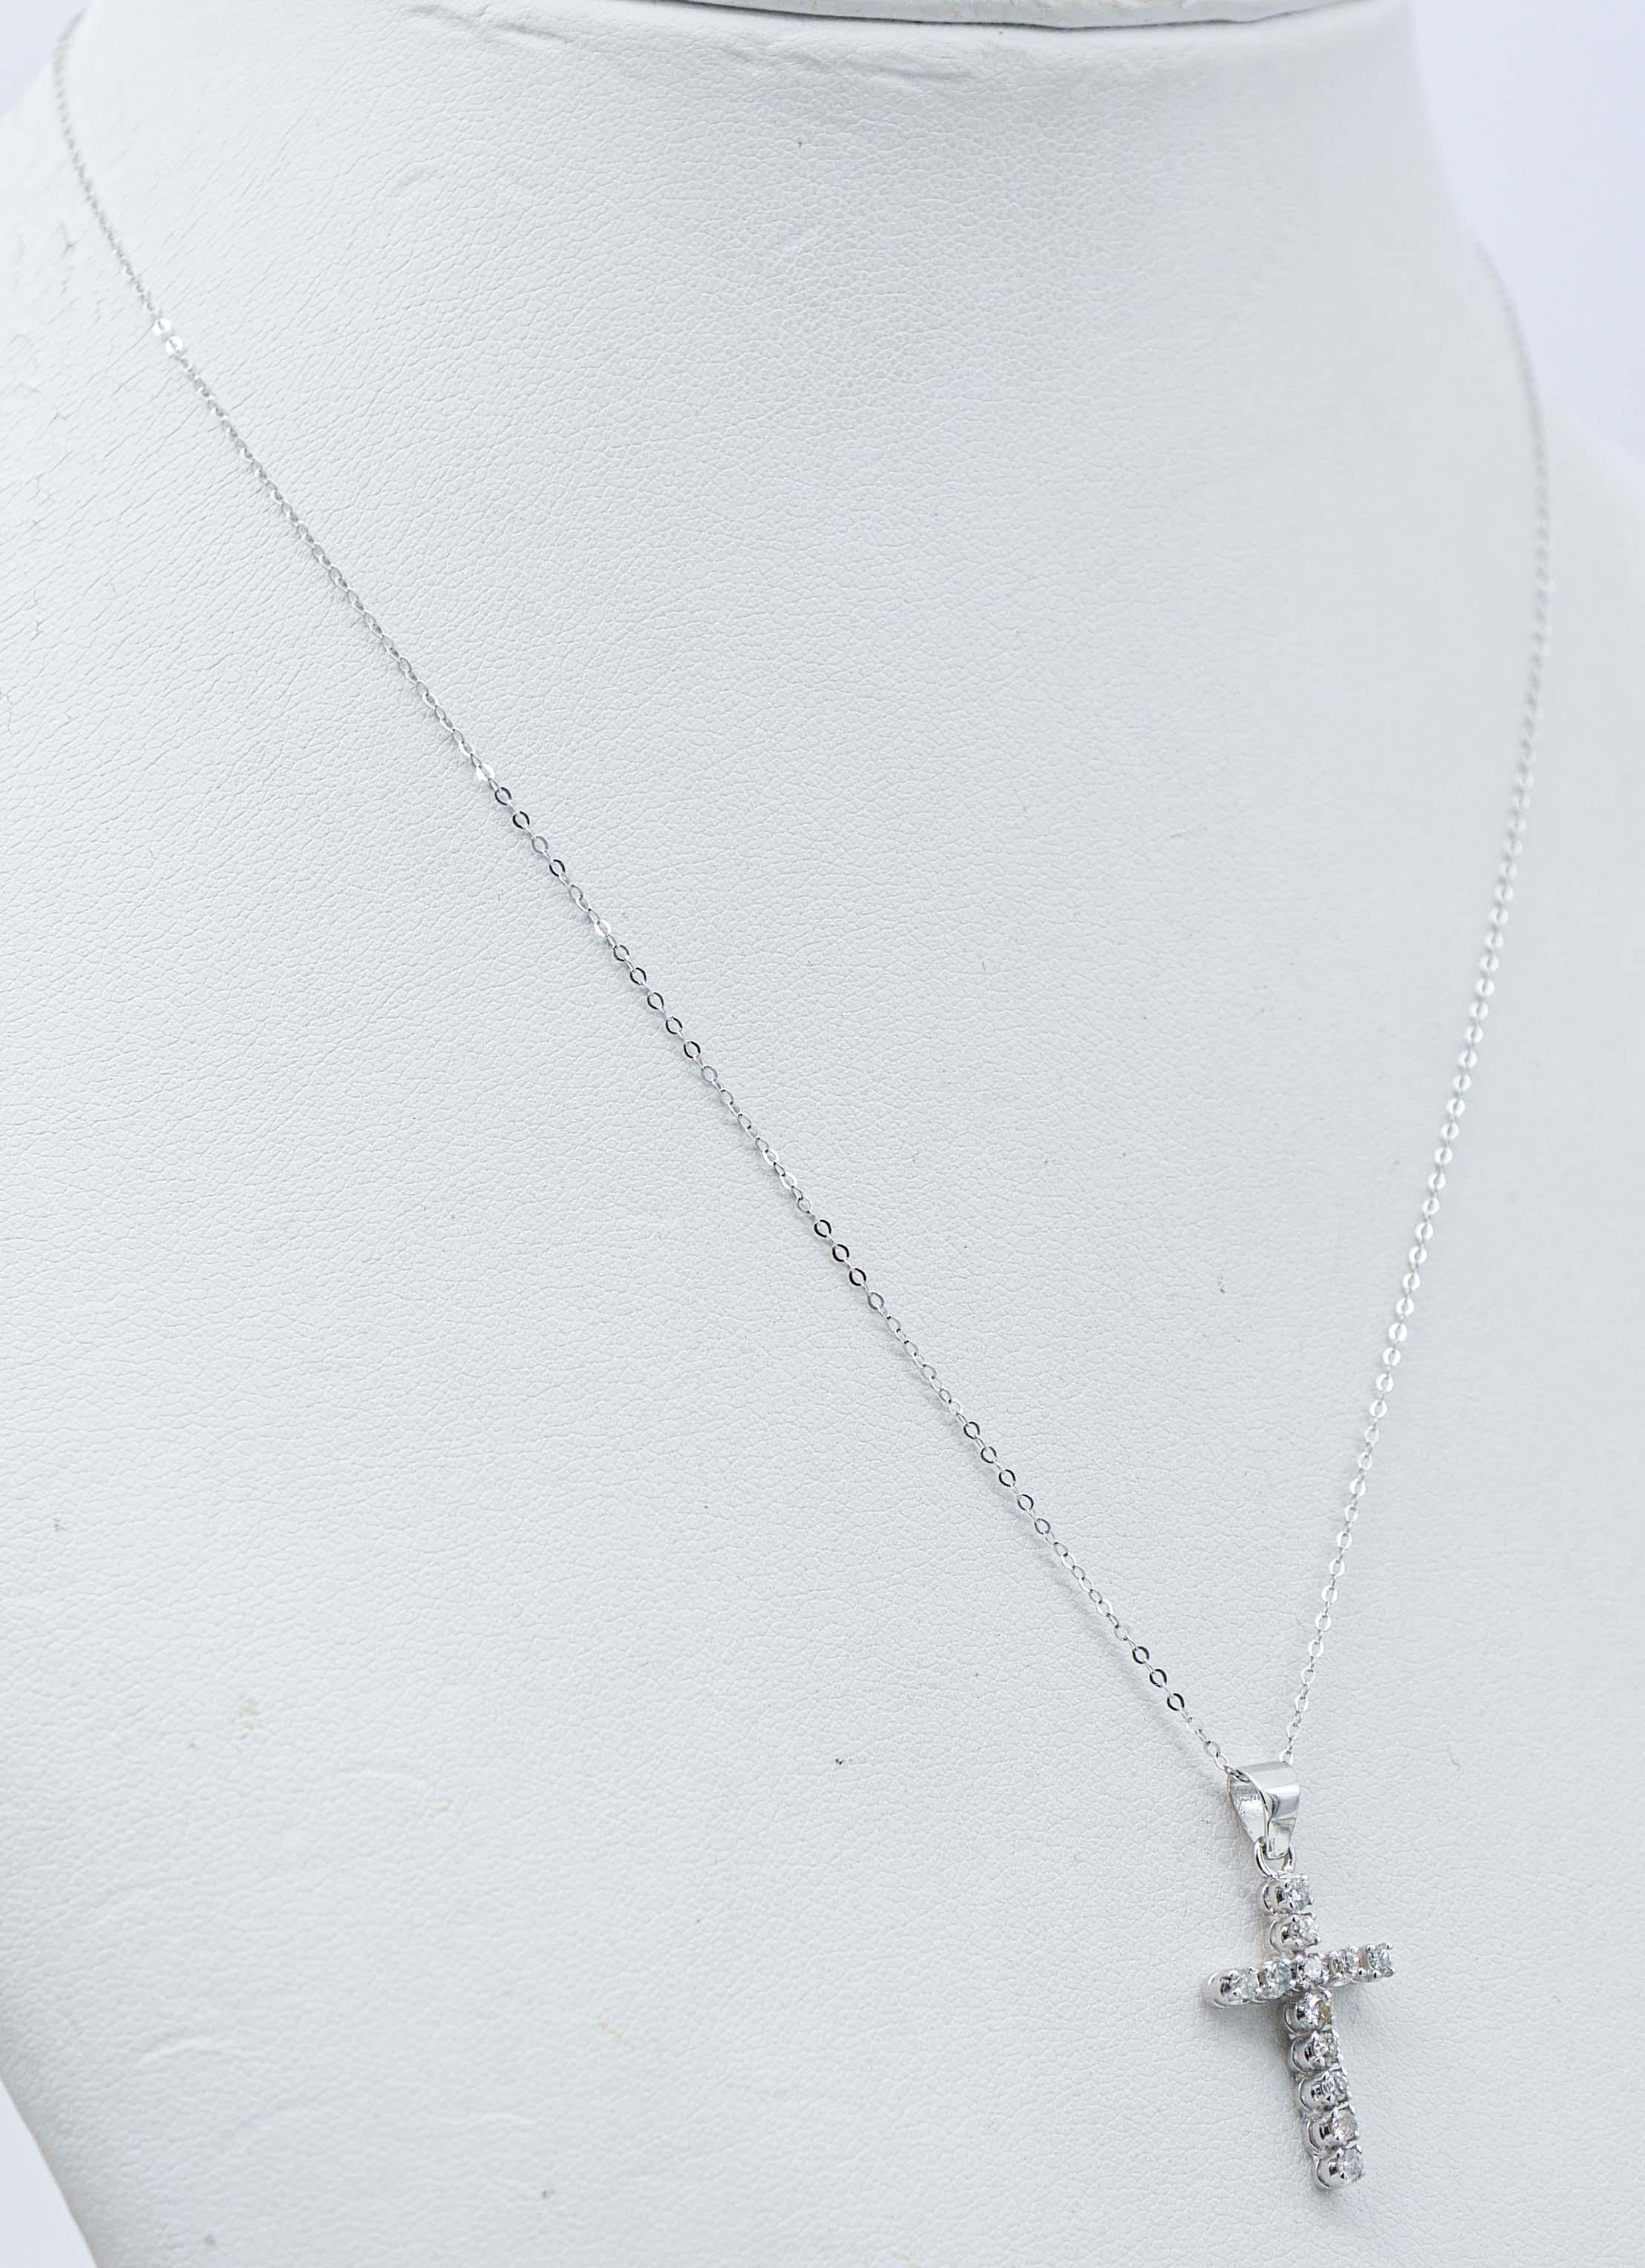 Retro 0.42 Carats Diamonds, White Gold Cross Pendant Necklace. For Sale